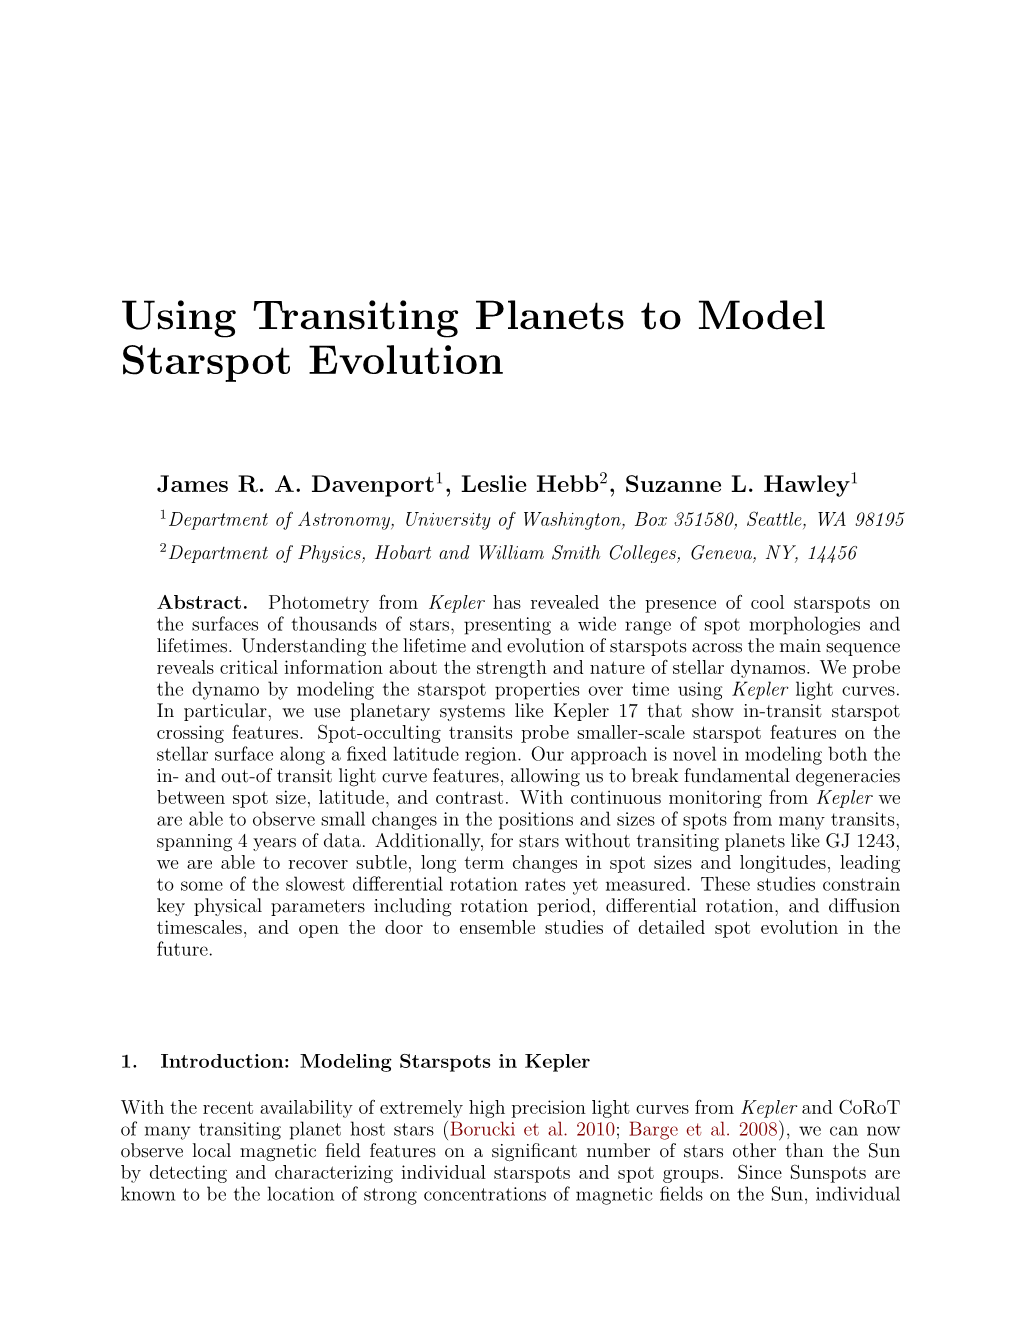 Using Transiting Planets to Model Starspot Evolution